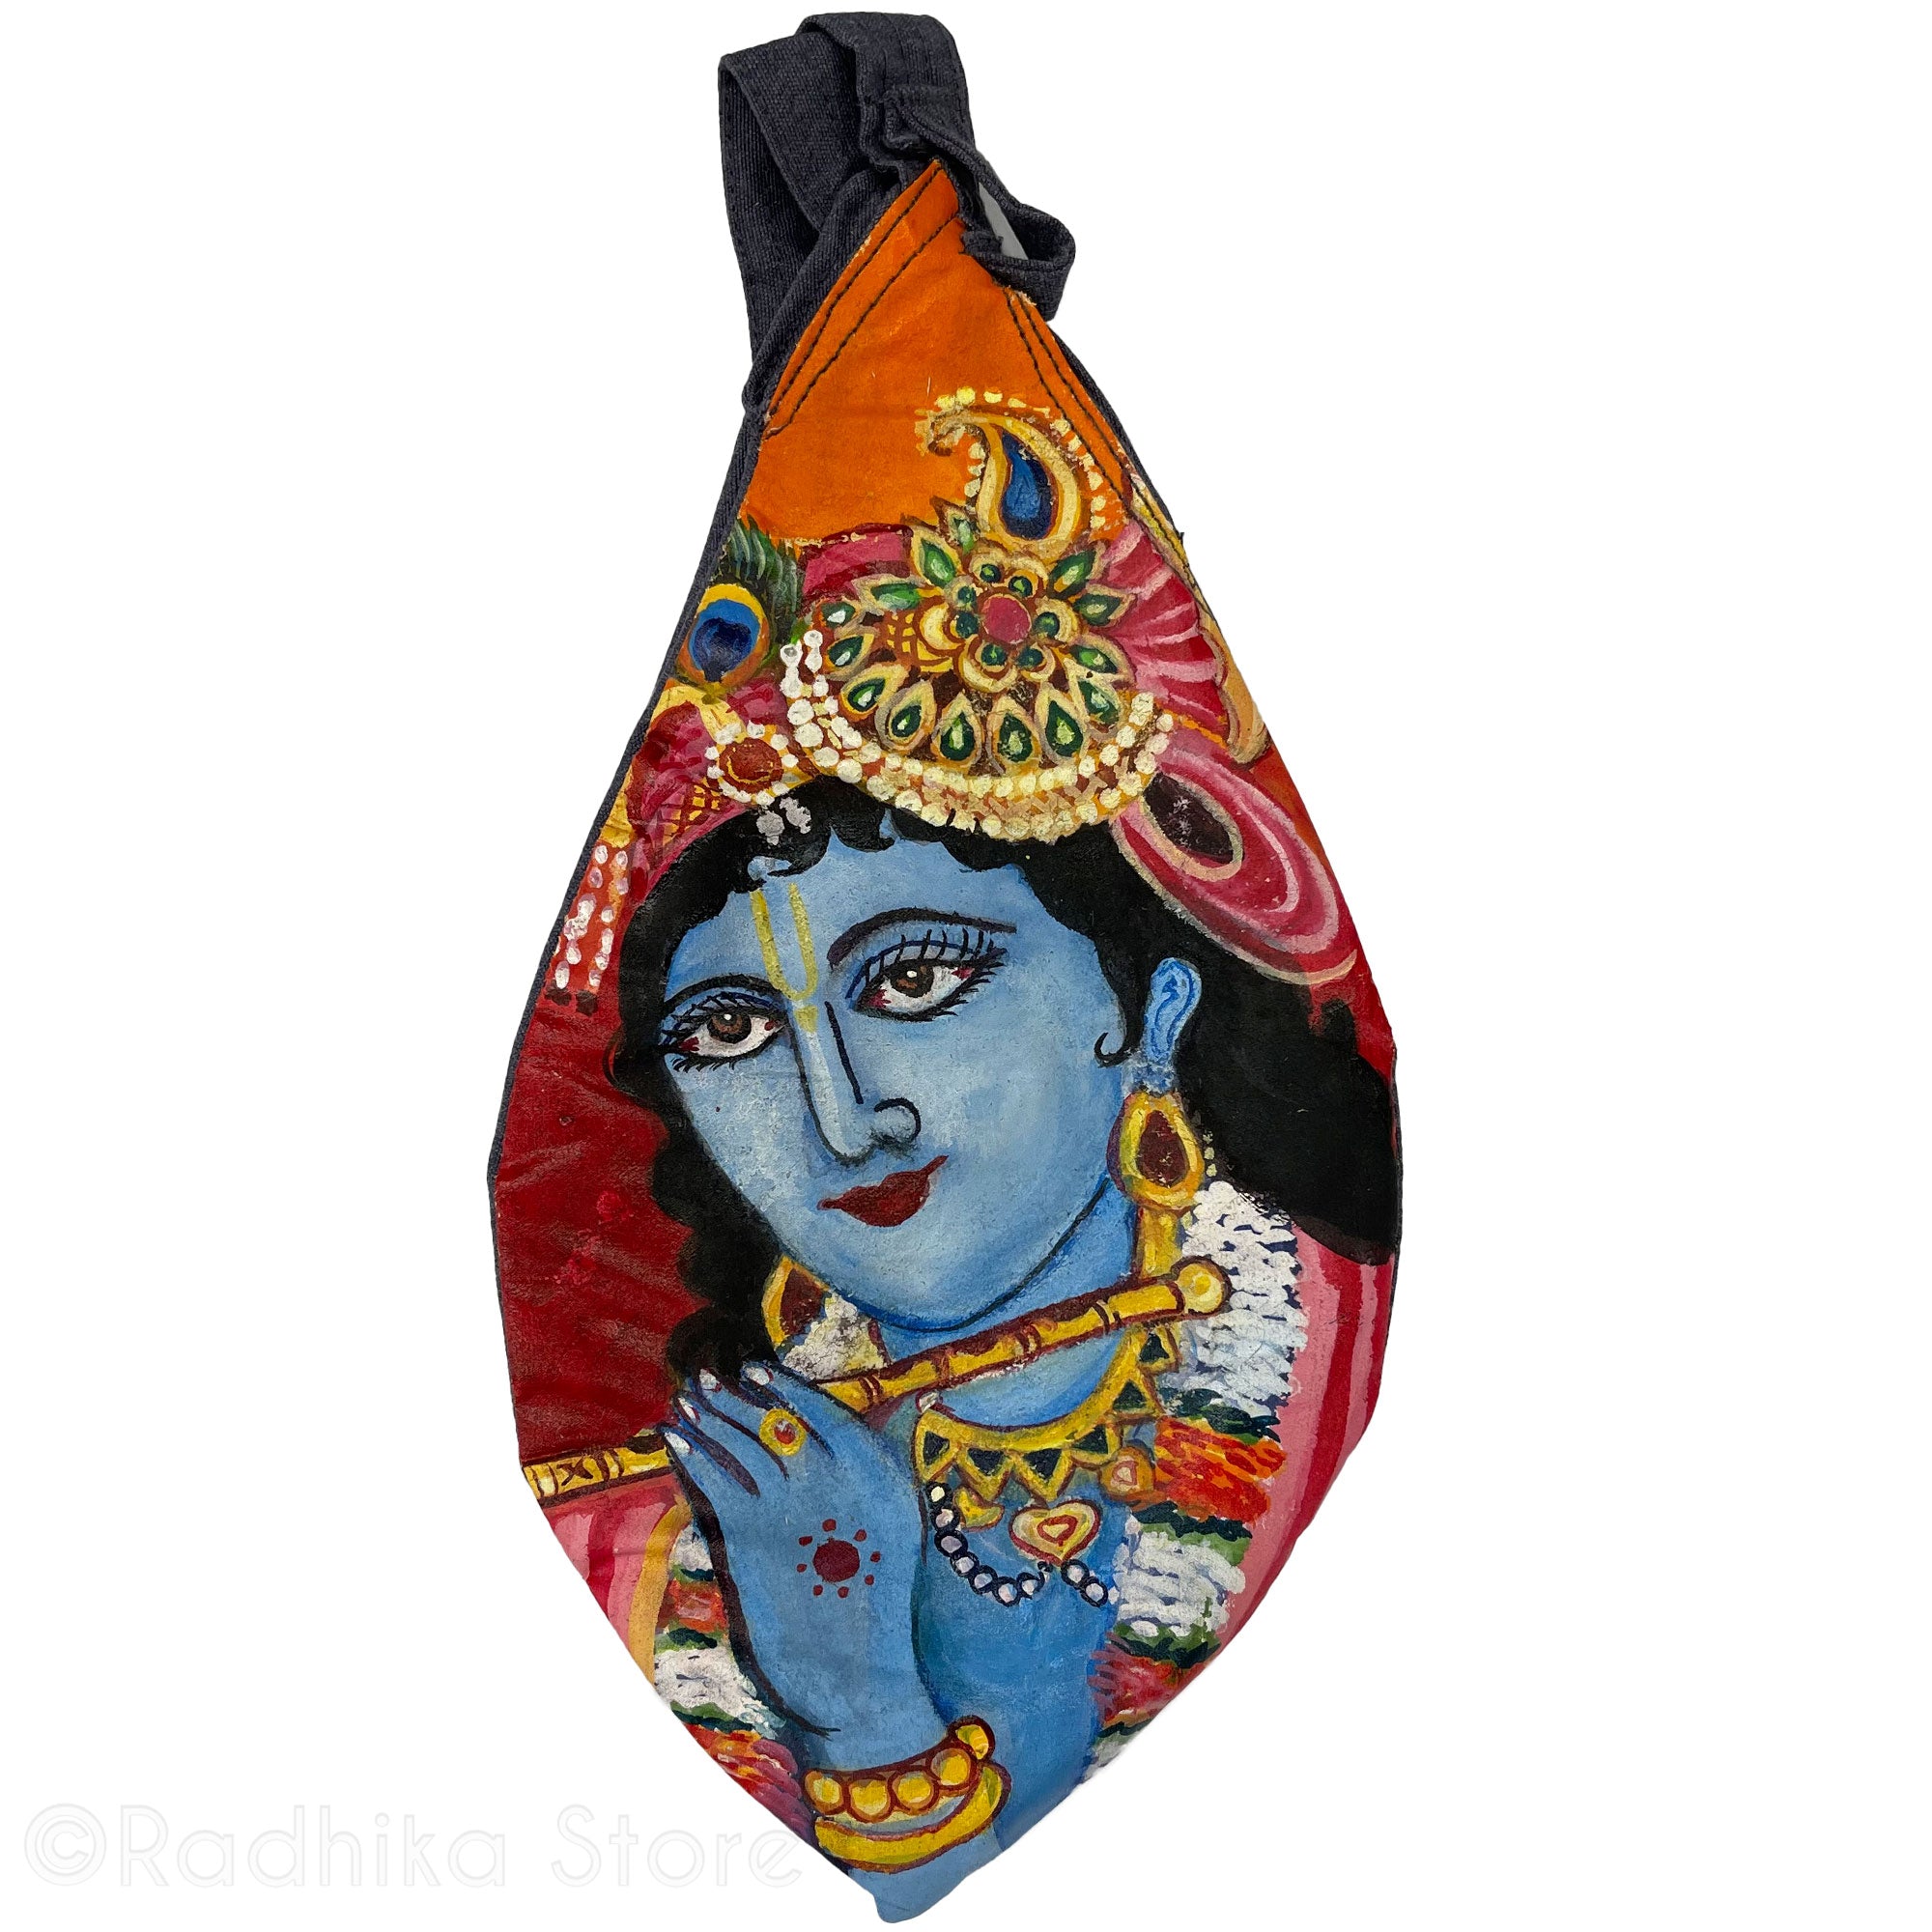 Murli Krishna - Hand Painted Bead Bag